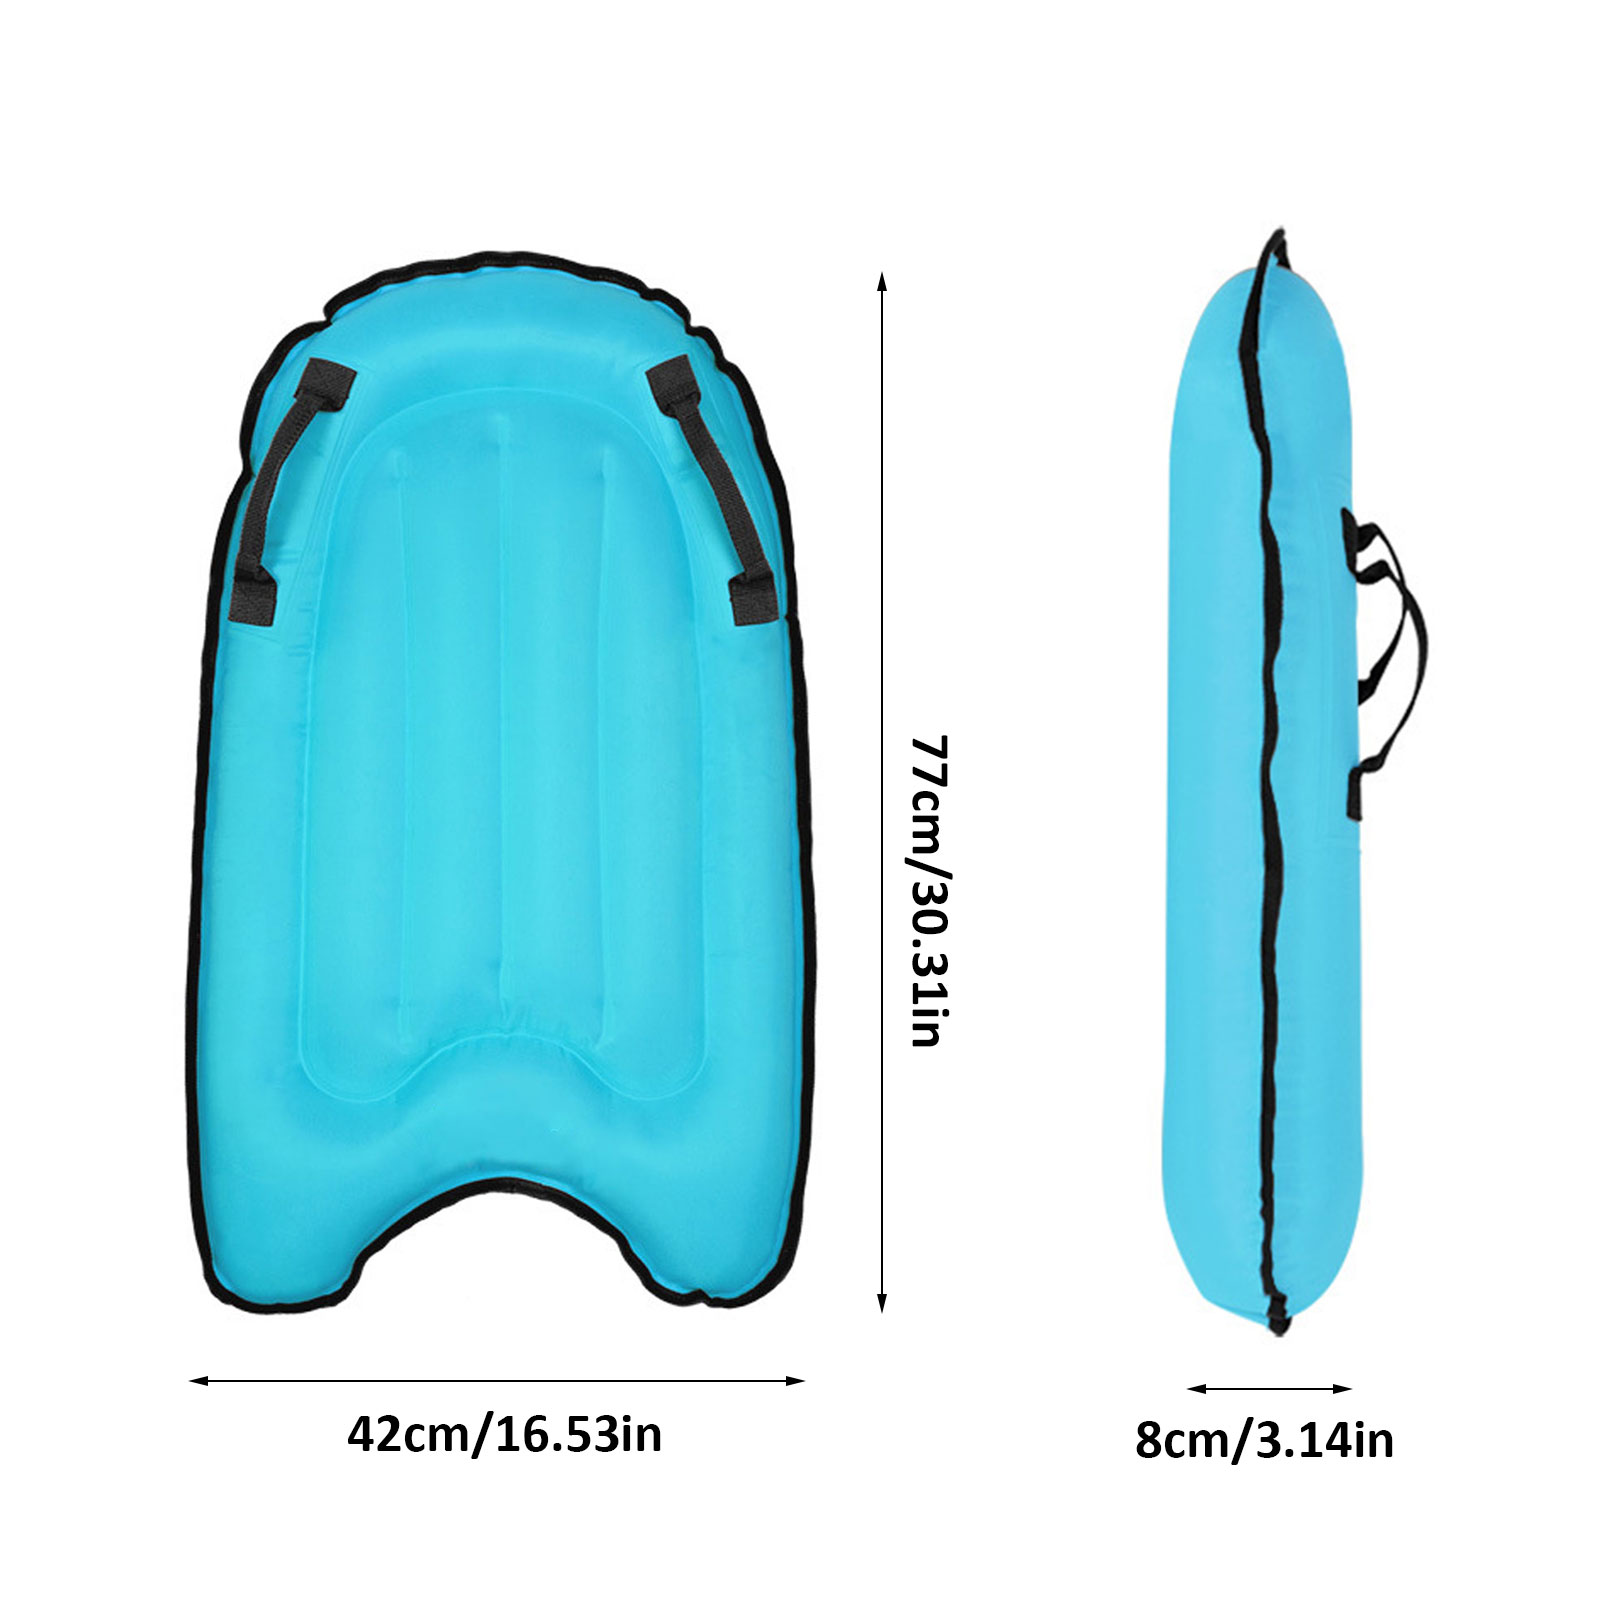 Children Portable InfIatable Bodyboard Handle Foldable Outdoor Swimming Pool Beach Surfboards Mini Surfboards Beginner Tranning